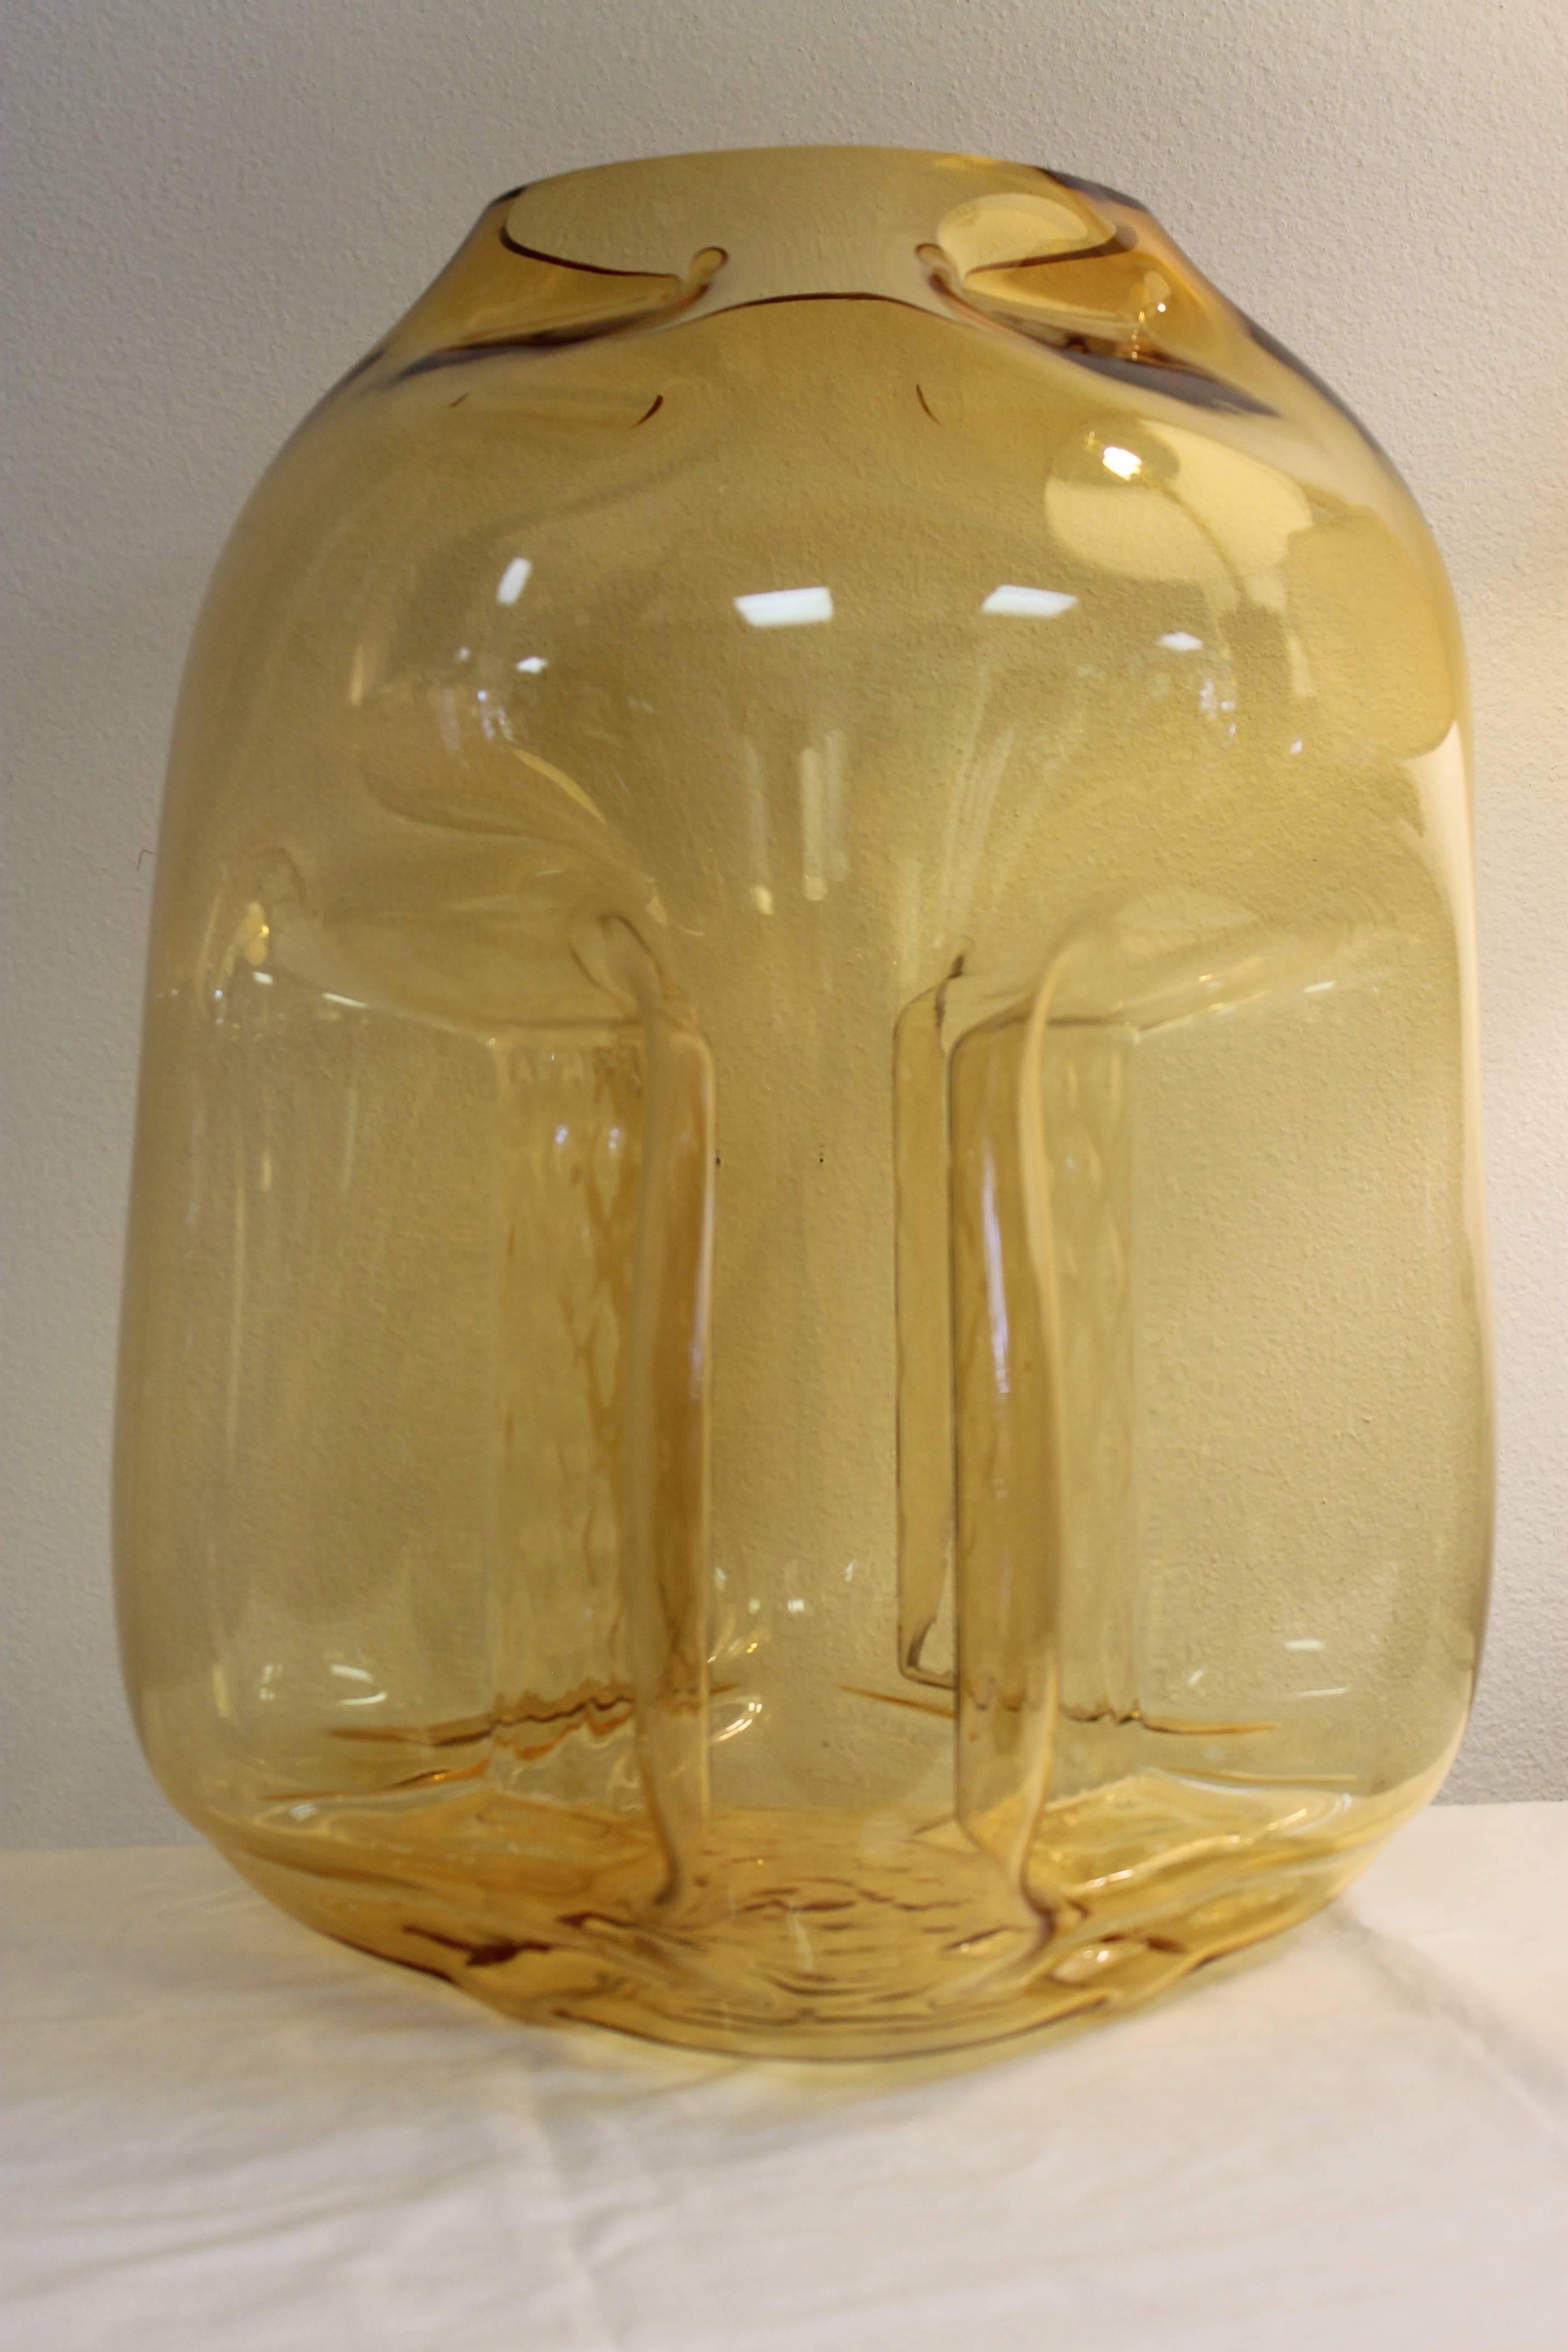 Tony Zucceri Italian glass vase. Beautiful butterscotch glass measuring 15.5